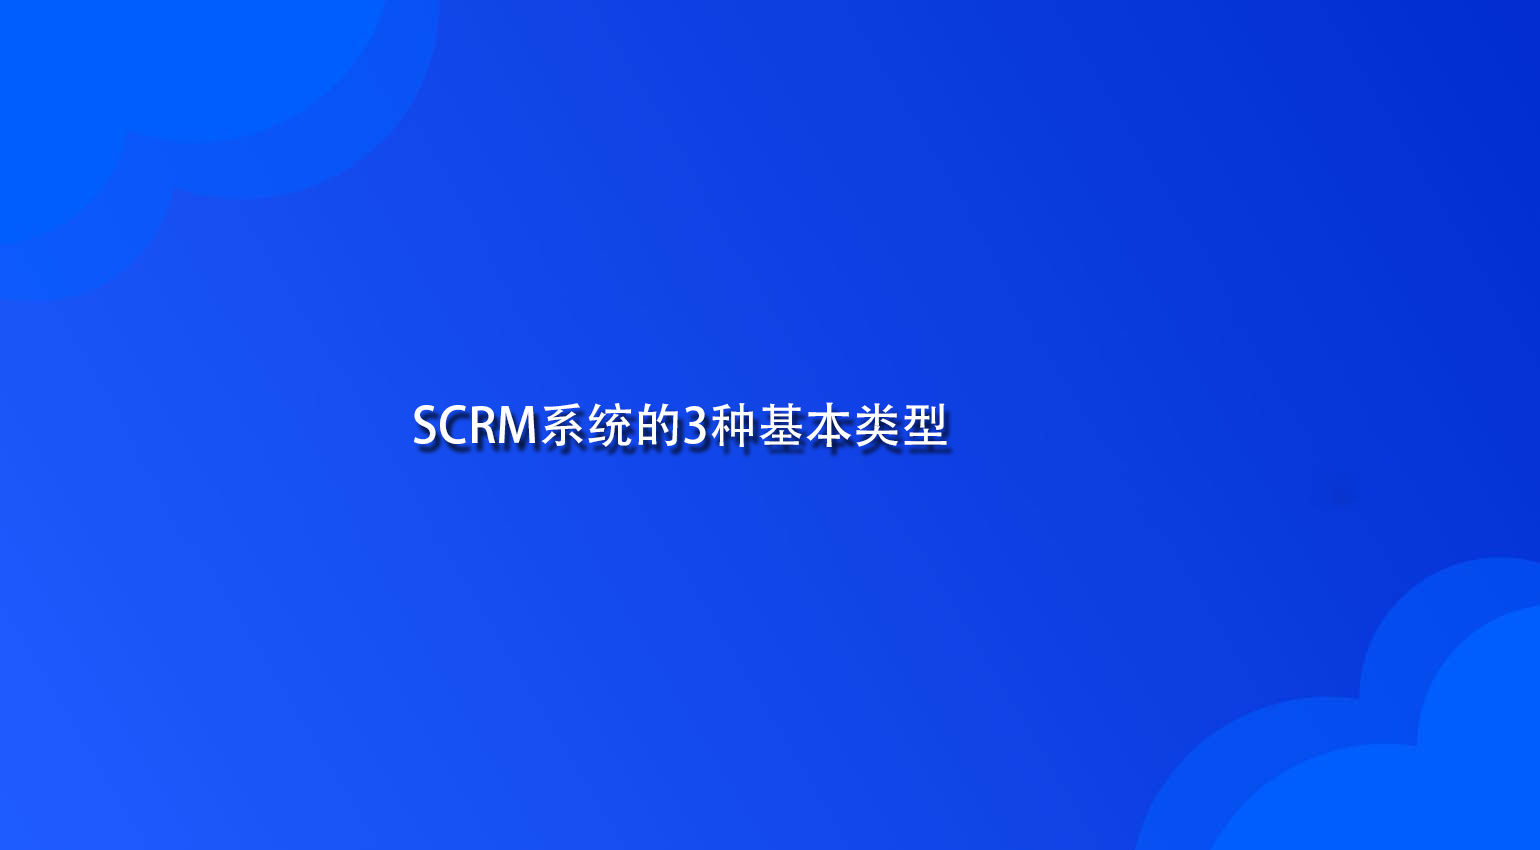 SCRM系统的3种基本类型